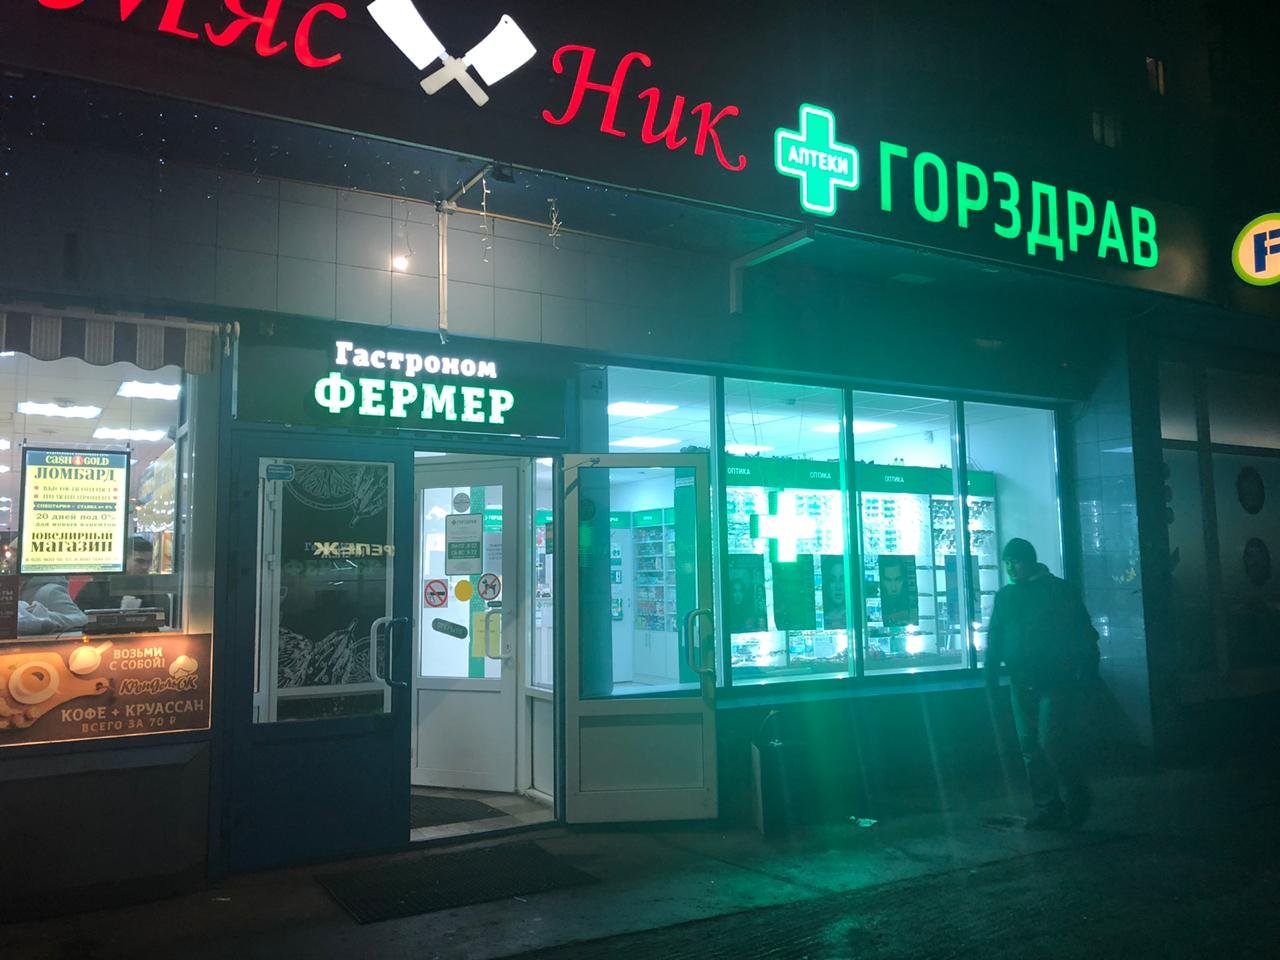 #Lightopticsone, Дубнинская, 12 к2 (1 этаж; аптека ГорЗдрав)